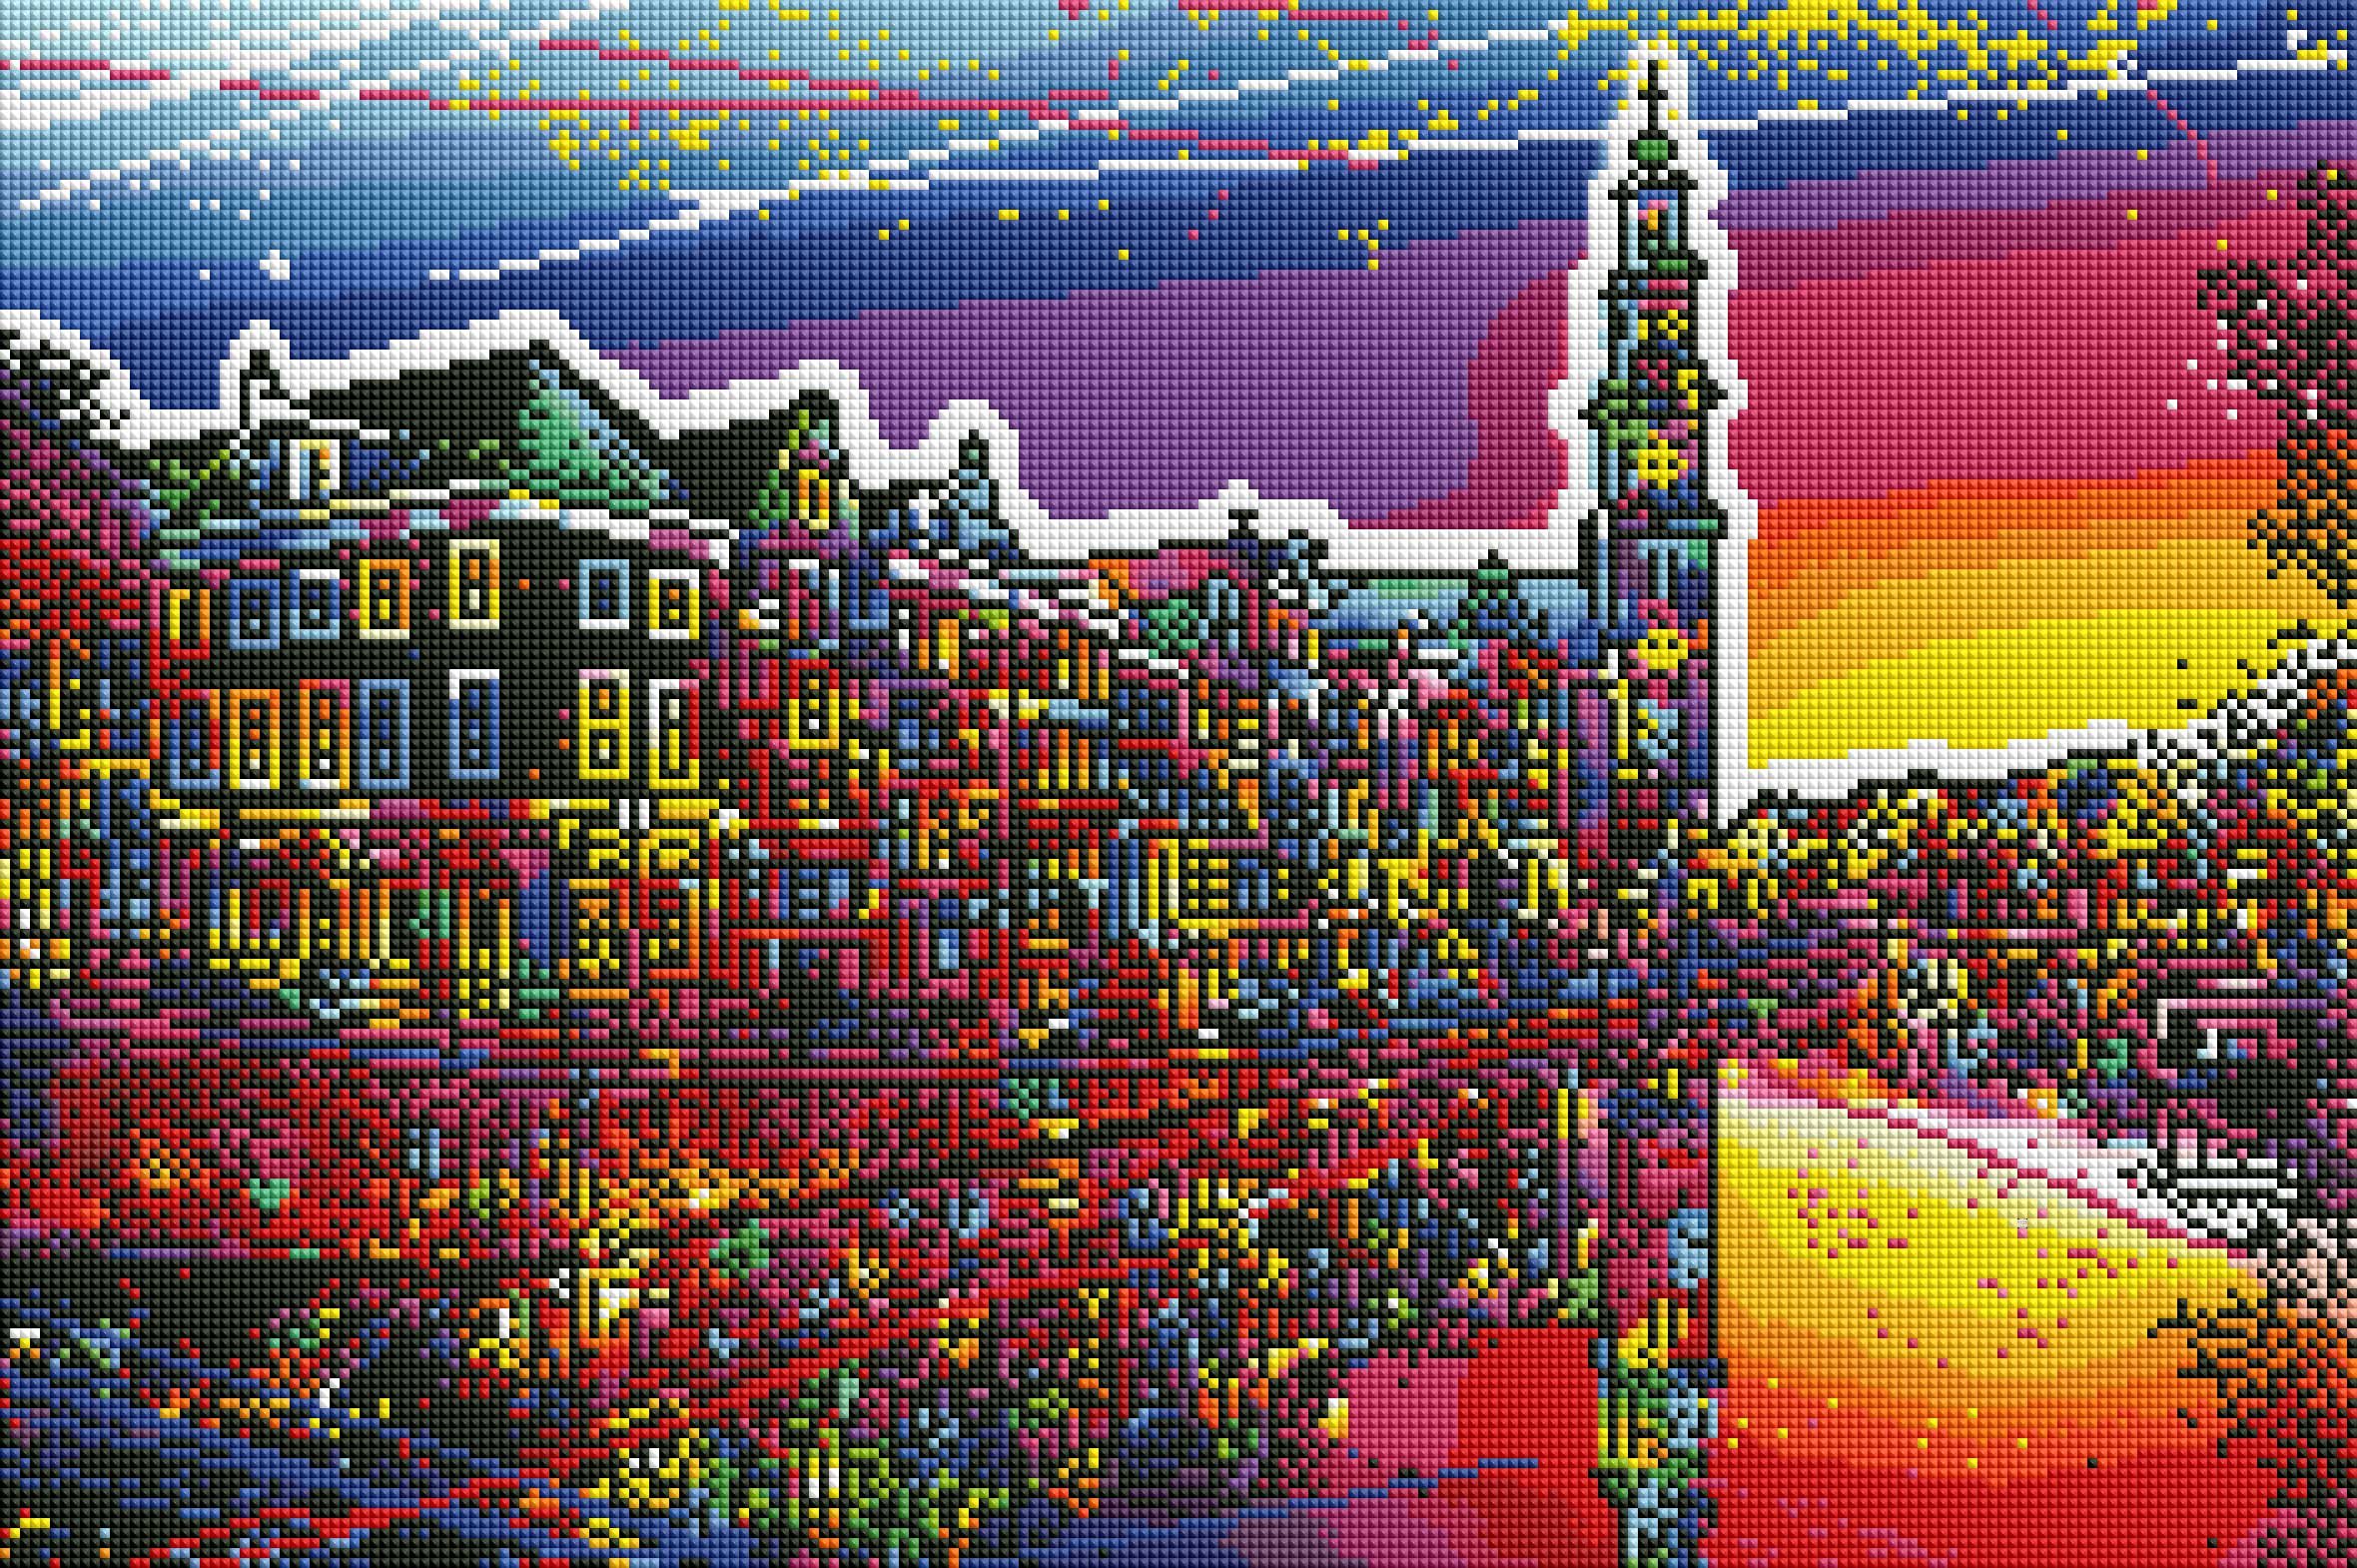 Colorful Amsterdam